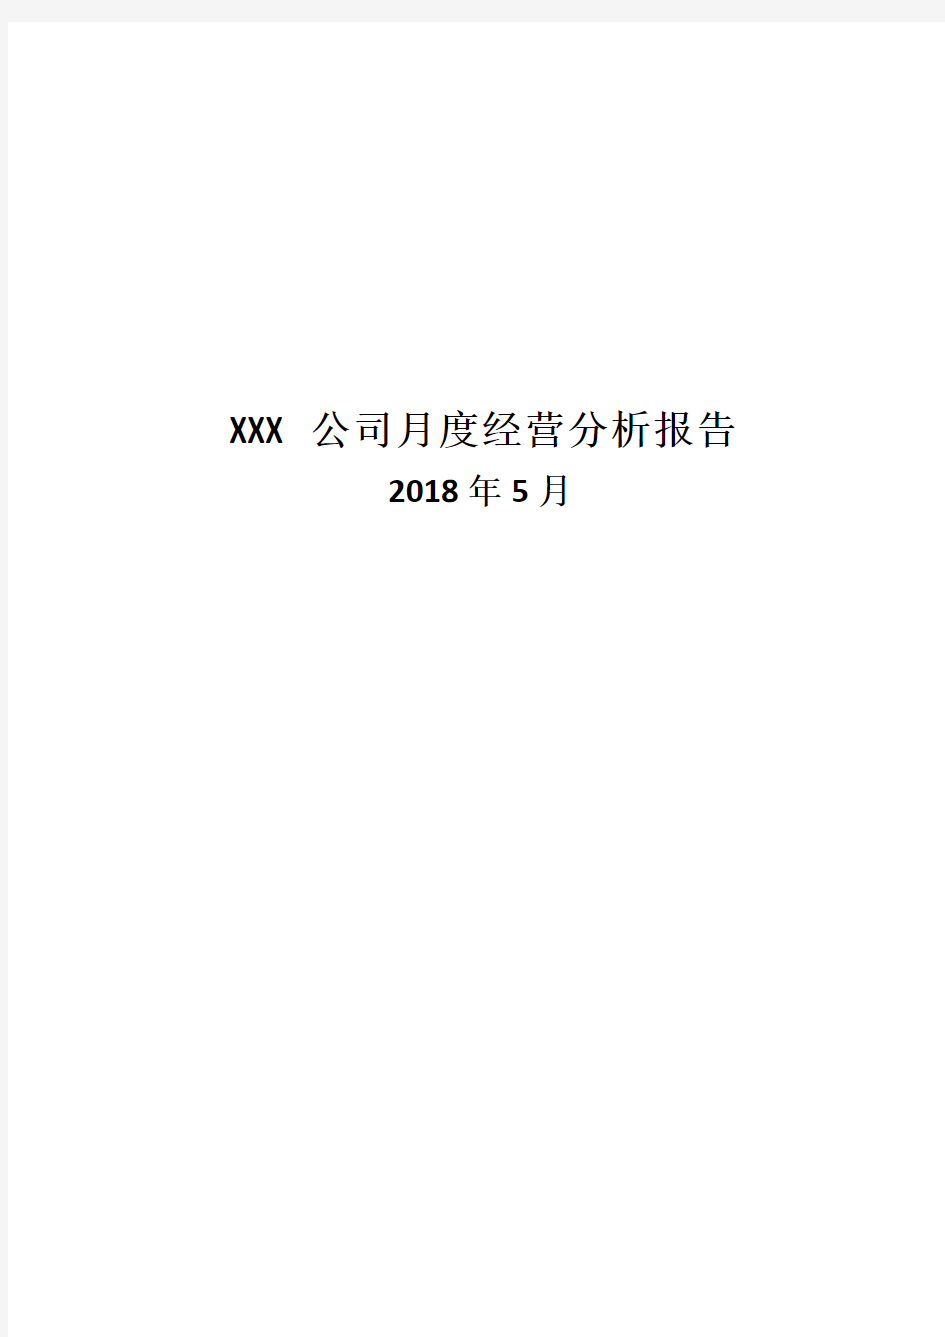 XXX公司月度经营分析报告.docx